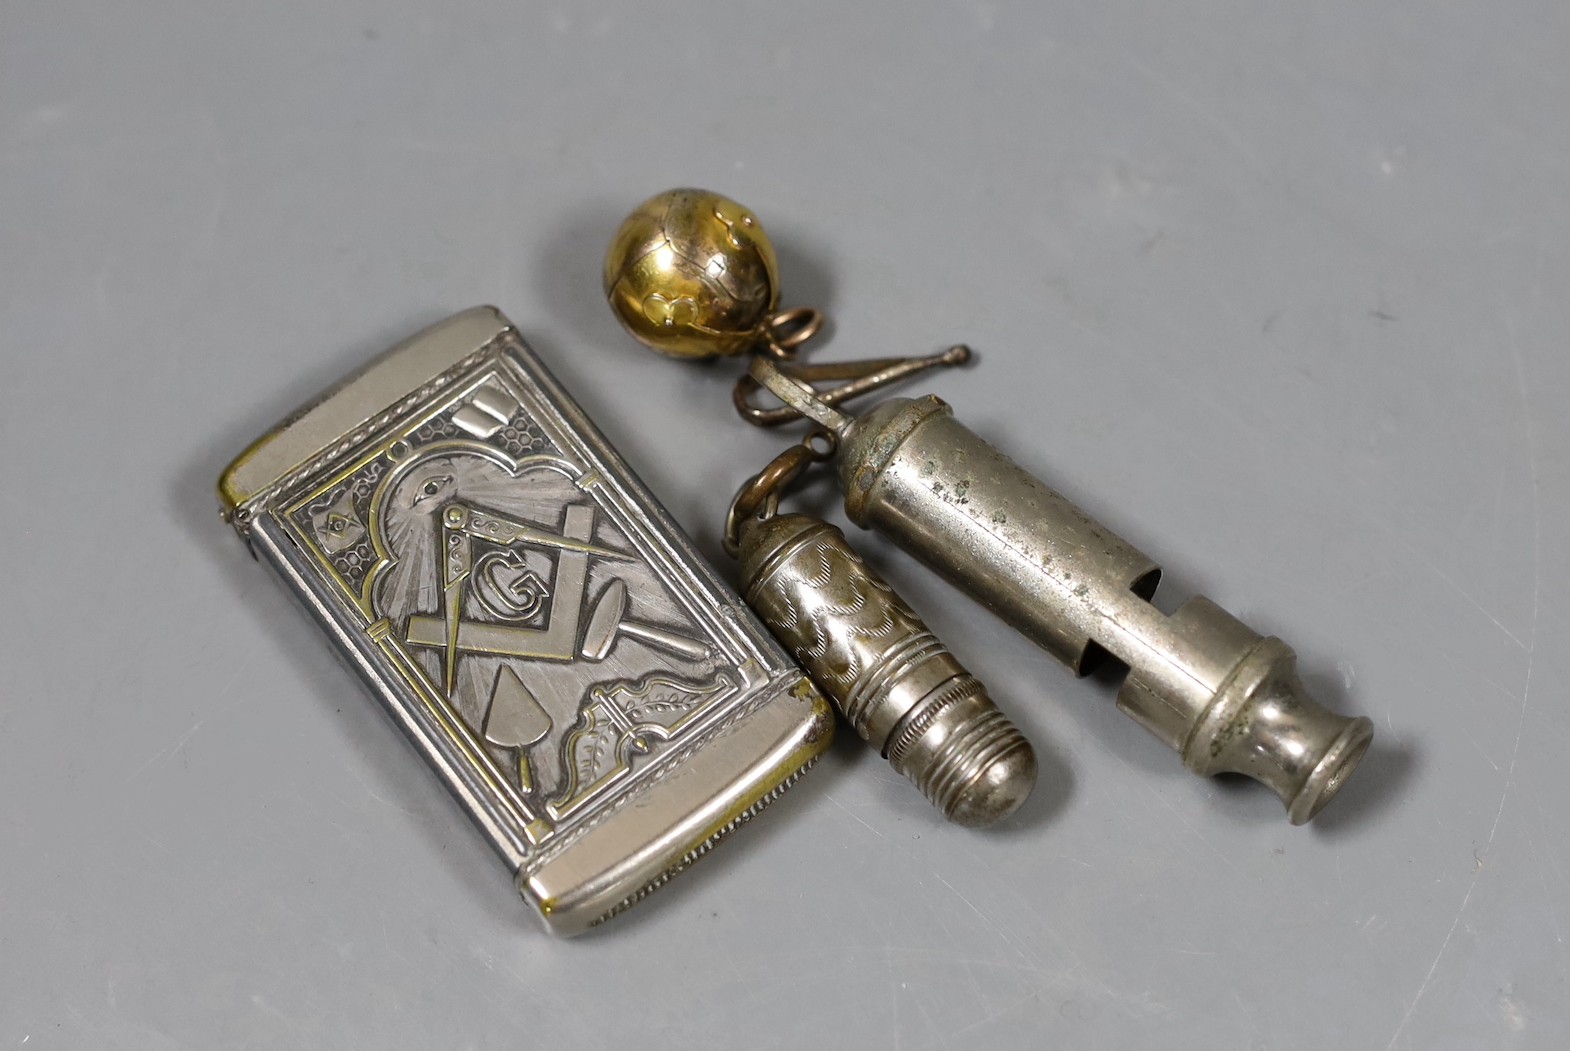 A Masonic gilt metal folding crucifix, Masonic vesta case, Police whistle, and dice case